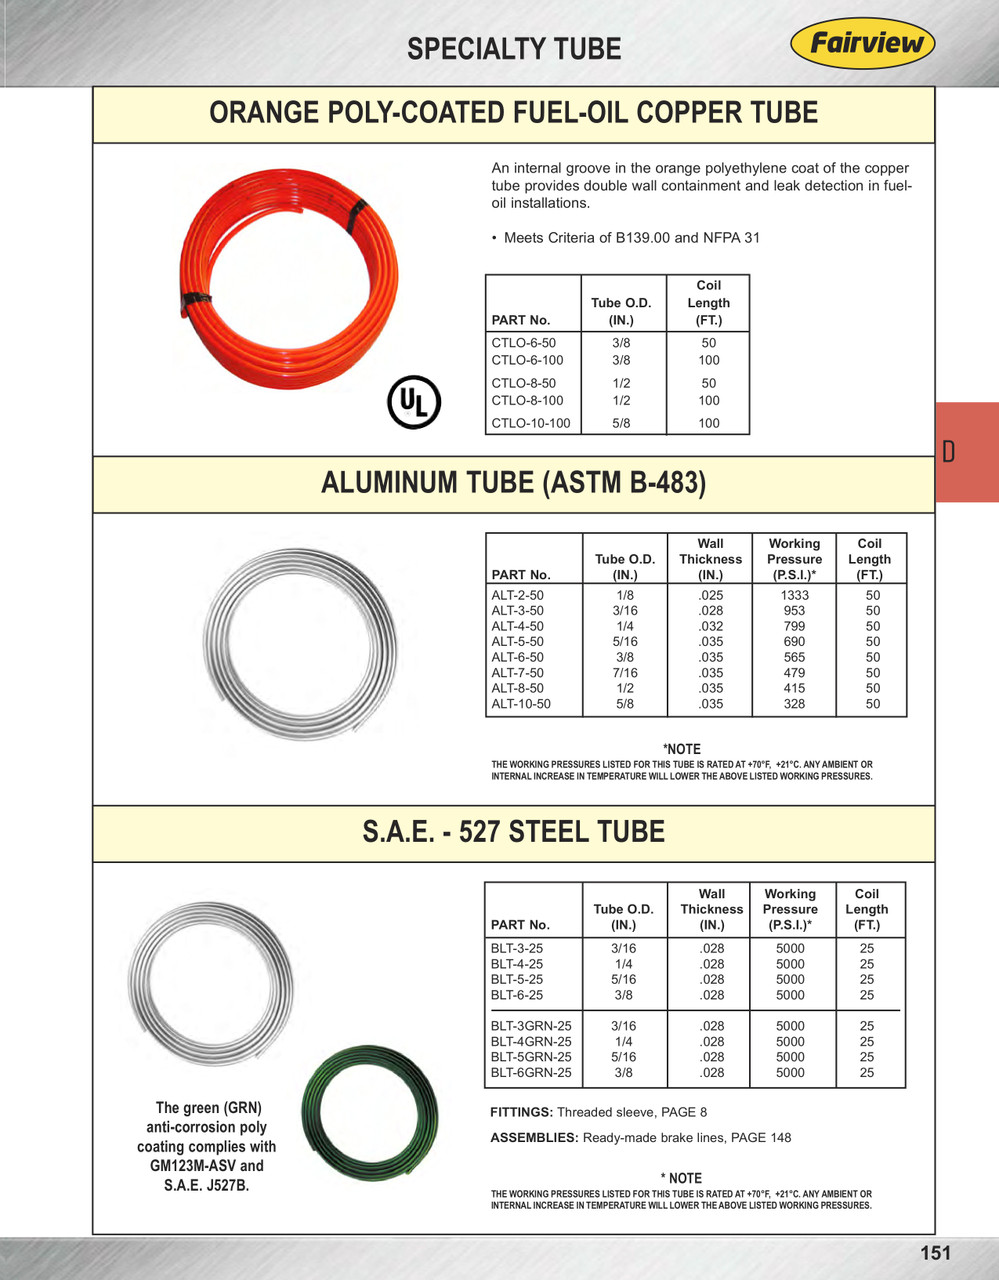 1/8" x 50' 50' Coil Annealed ASTM B-483 Aluminum Tubing  ALT-2-50